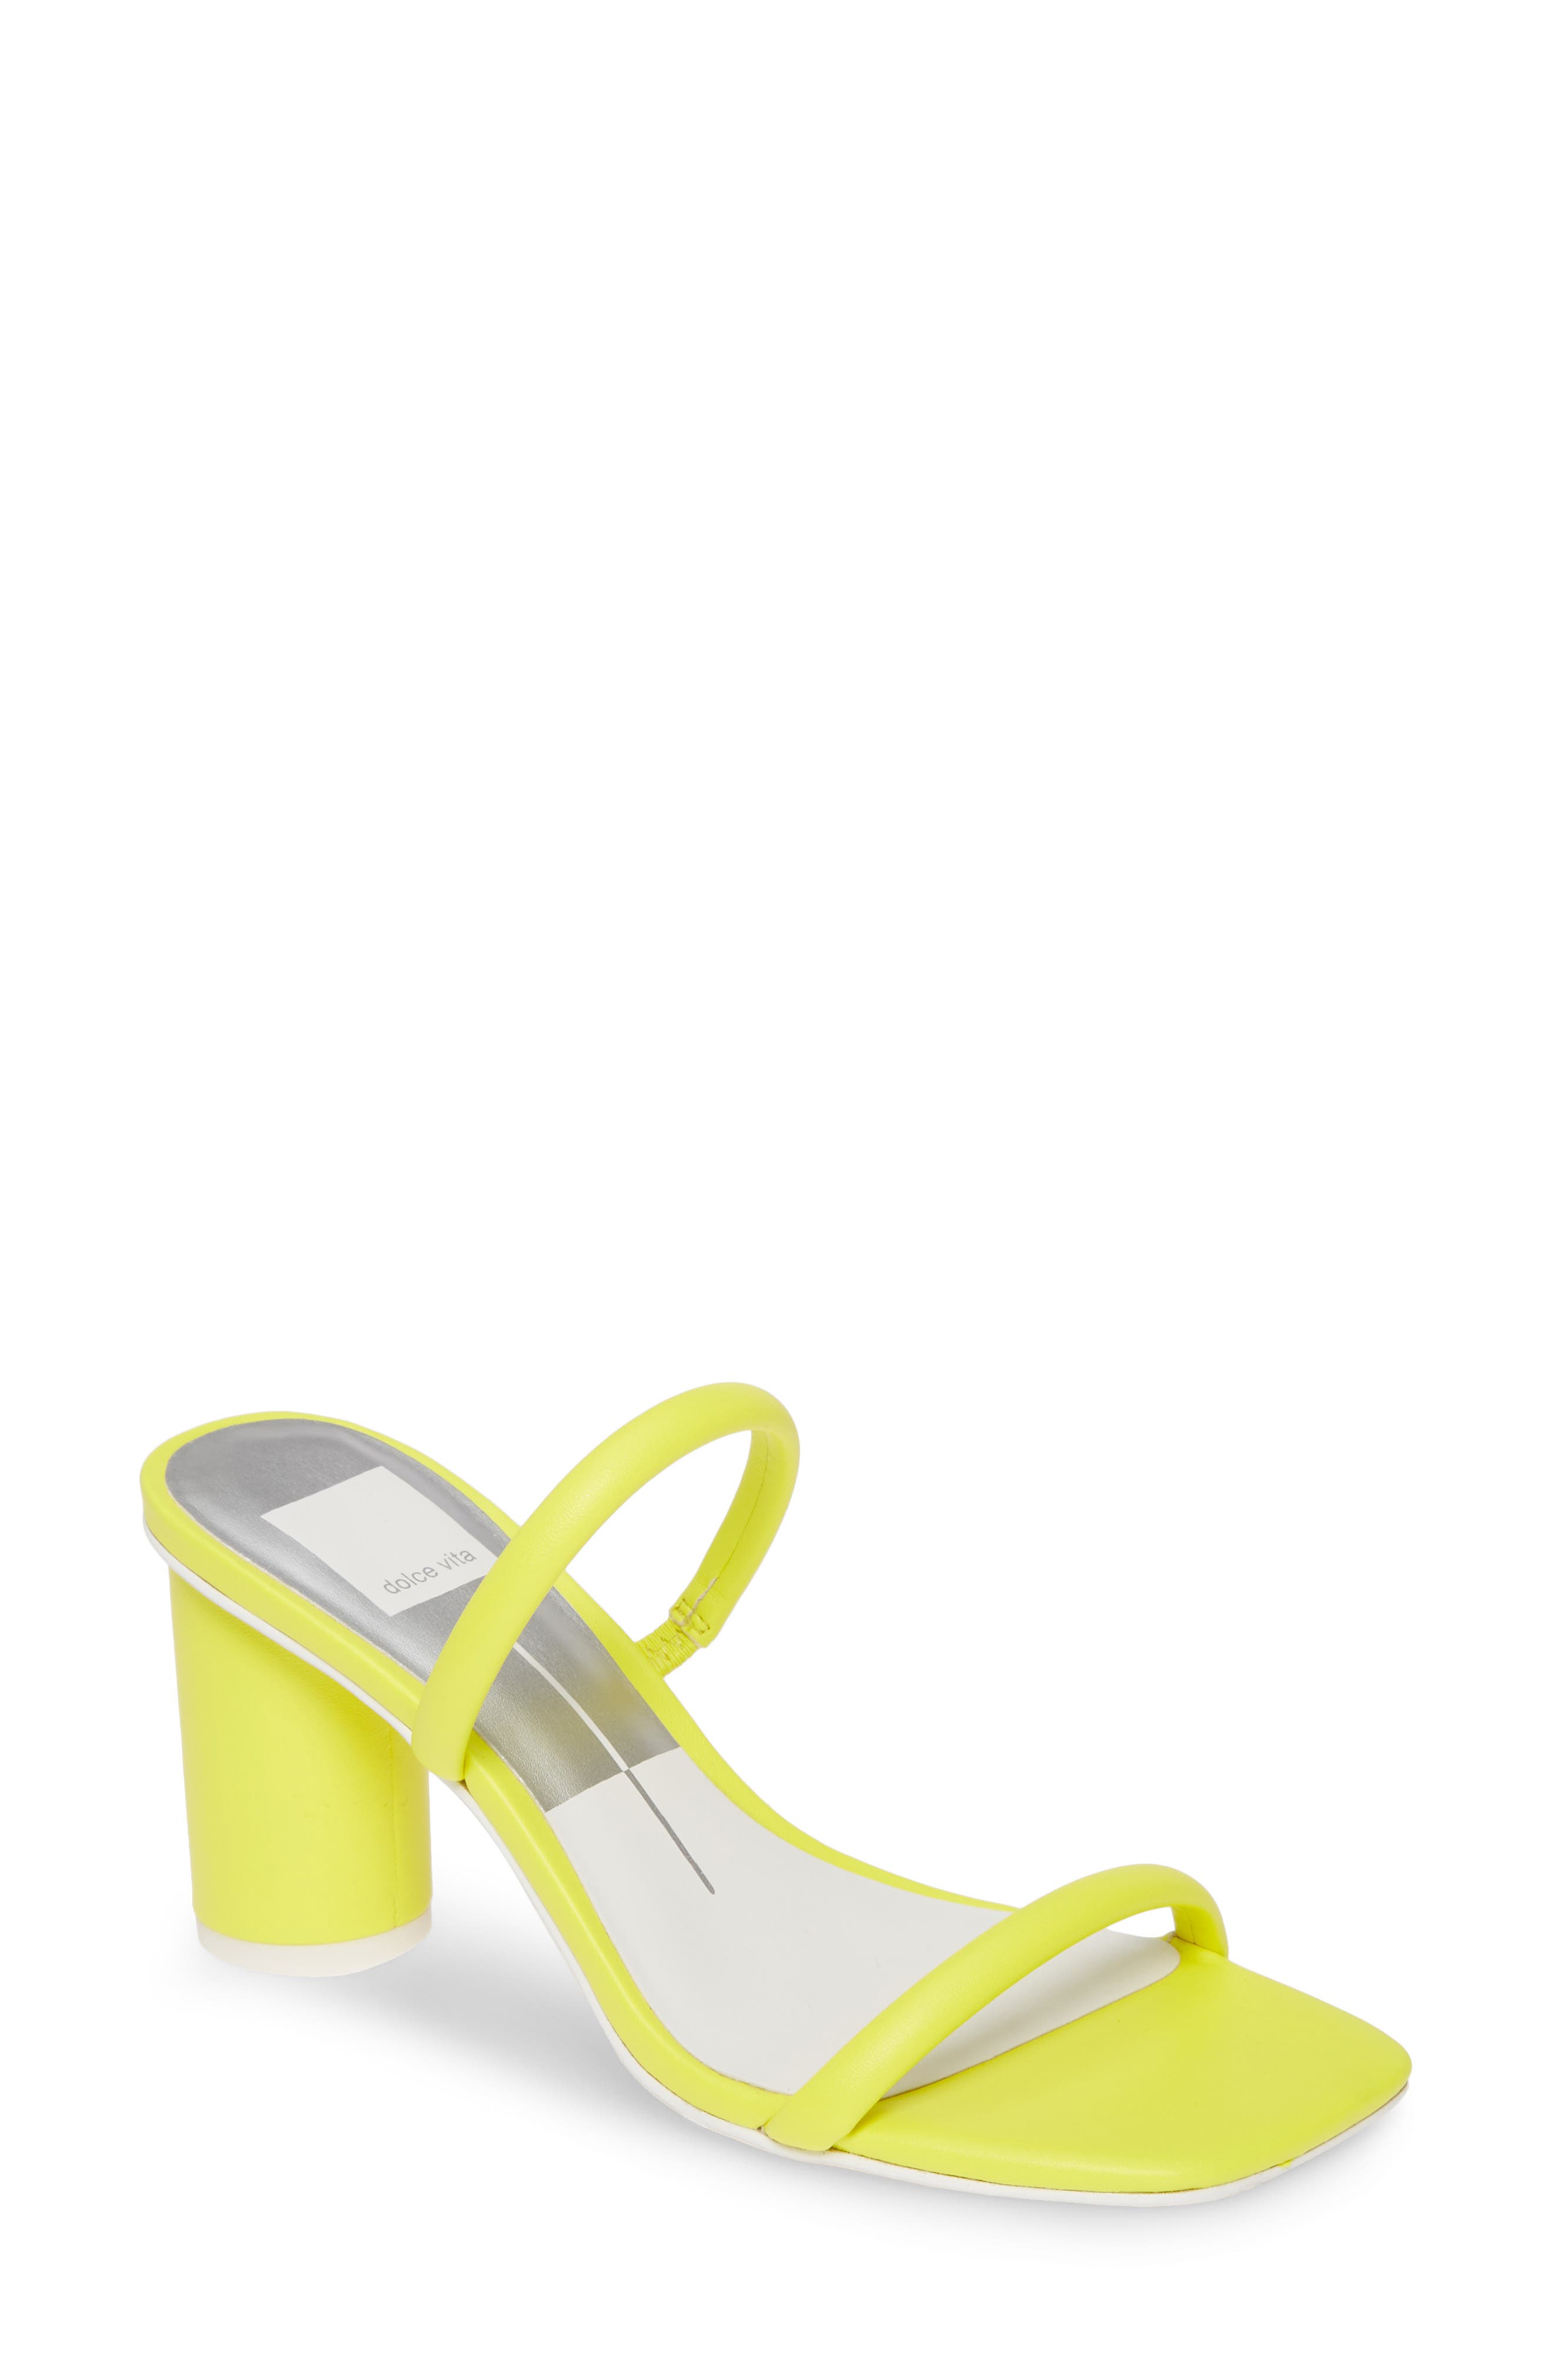 Dolce Vita Noles City Slide Sandal In Neon Yellow